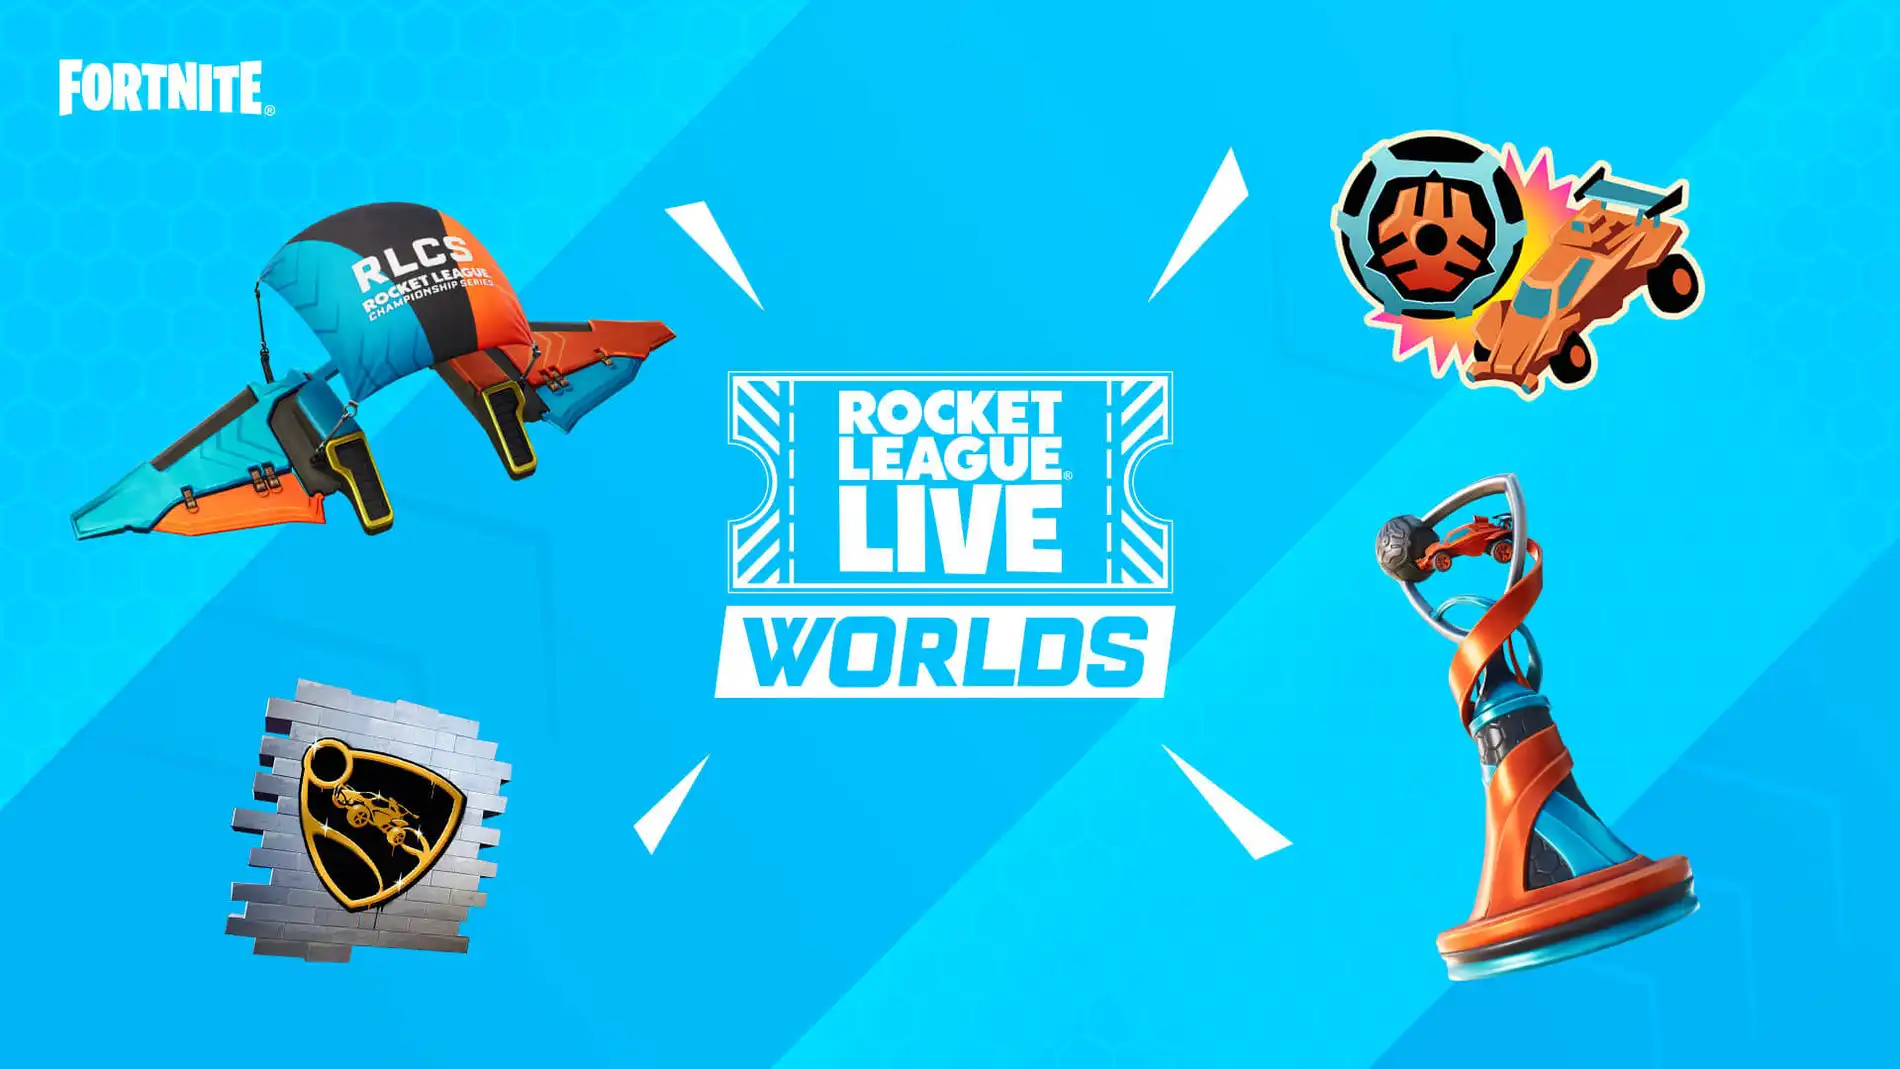 Evento Rocket League en Fortnite